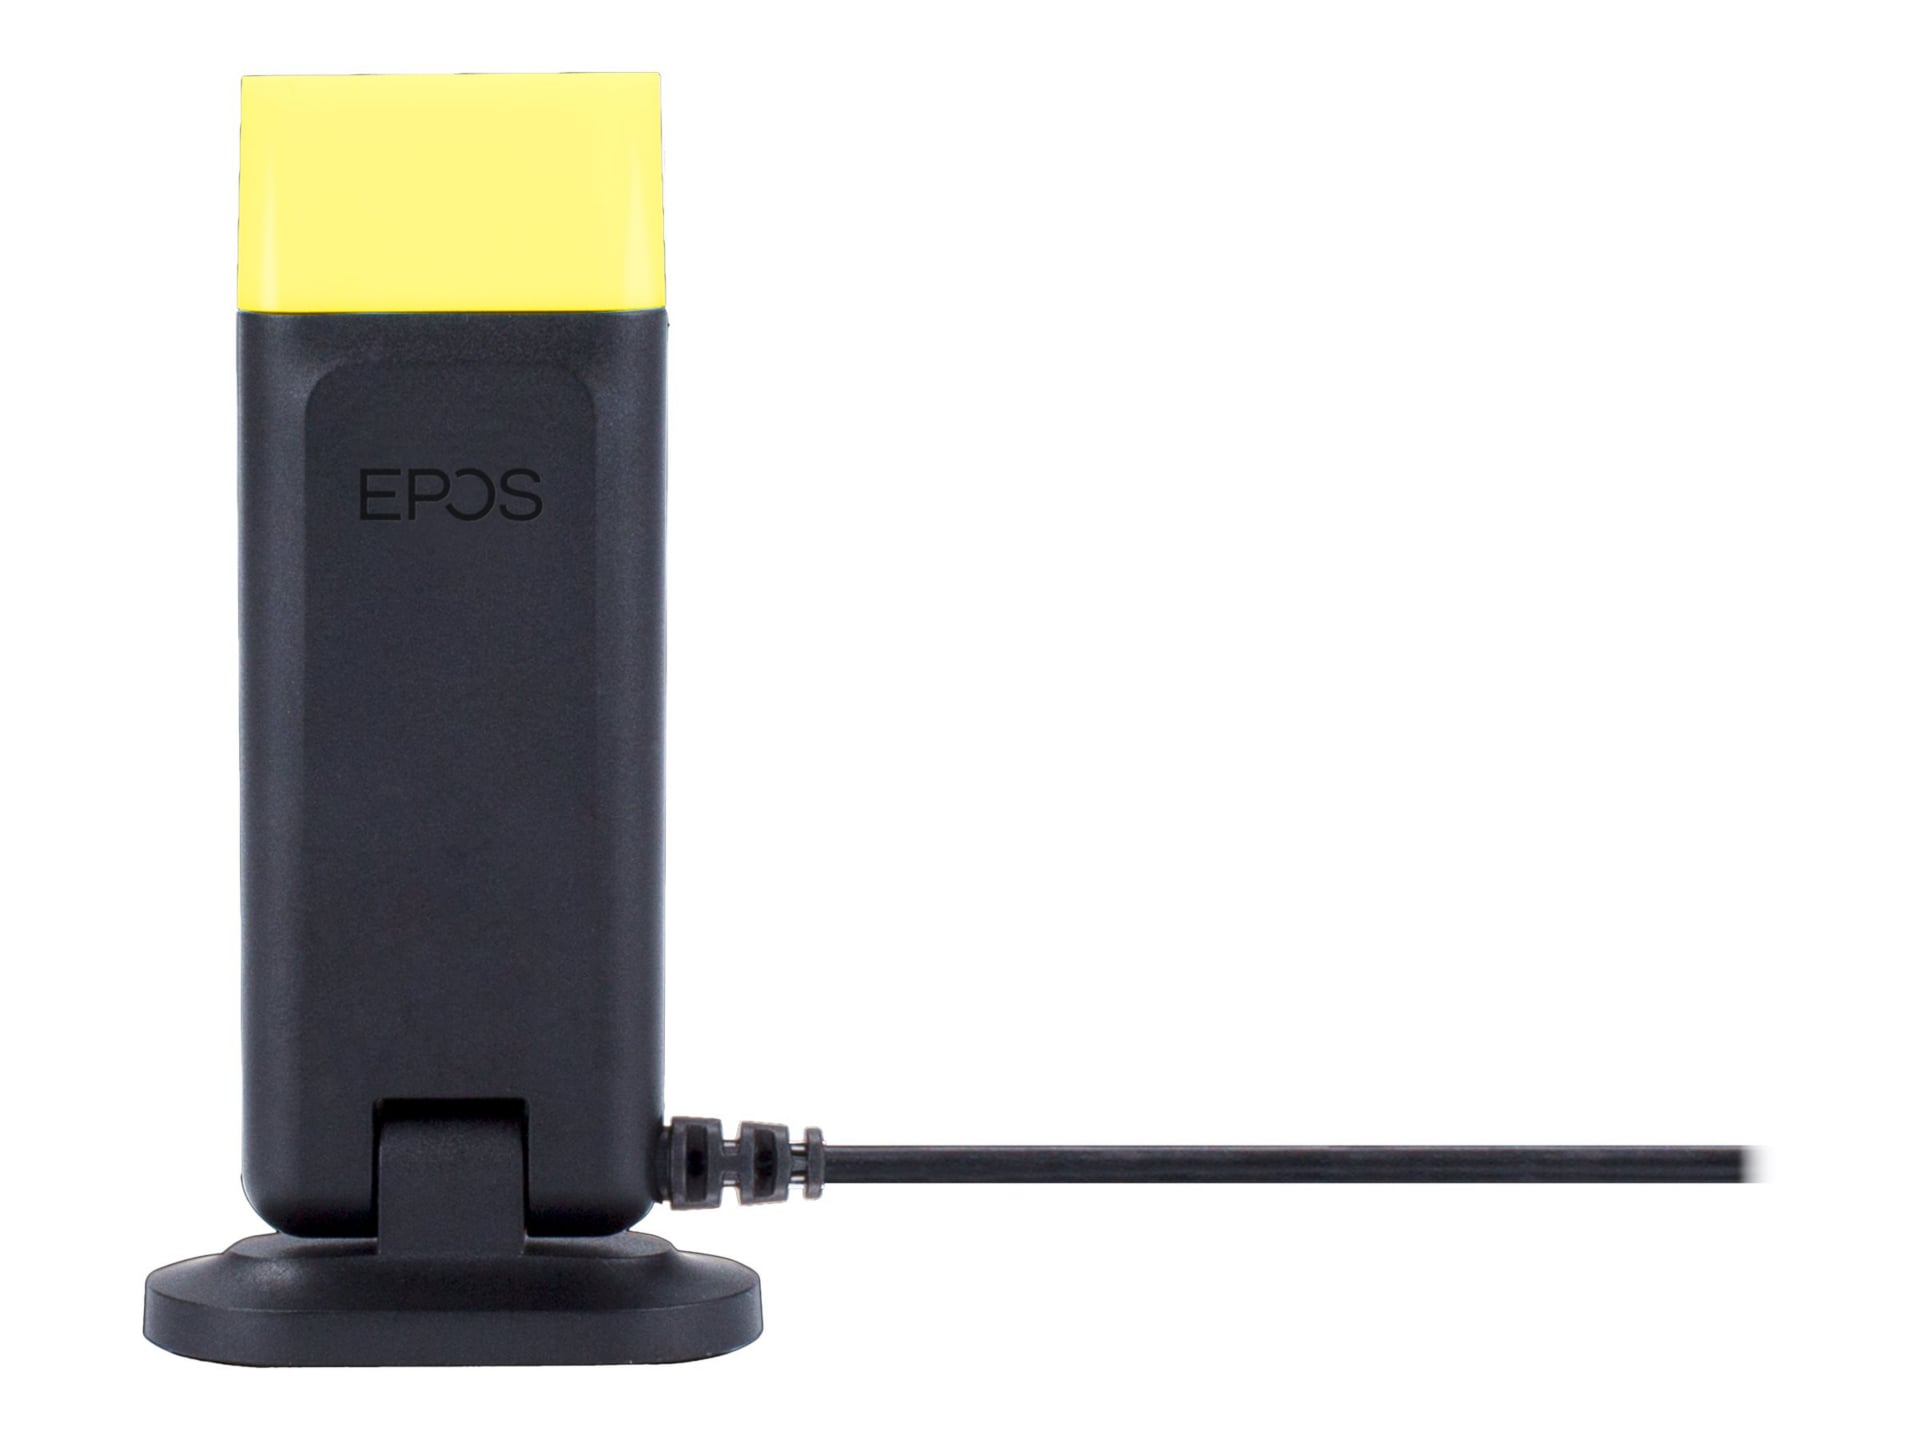 EPOS - headset busy light indicator for headset